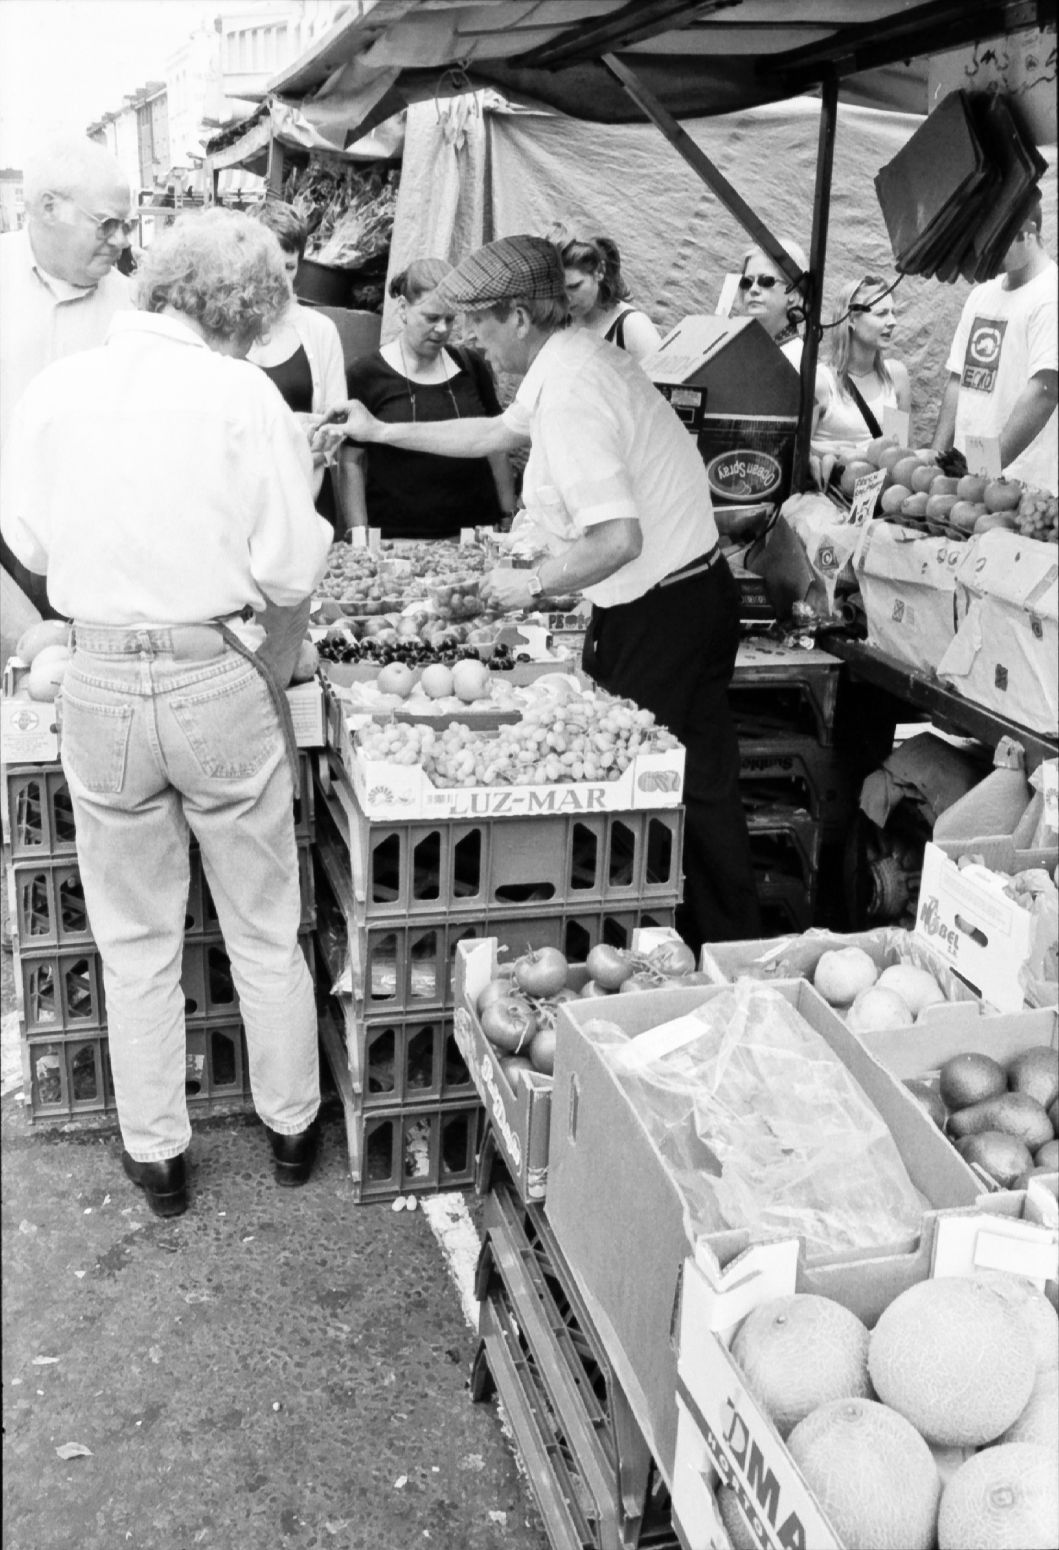 Fruits. Portobello Market, London, England. April 2000